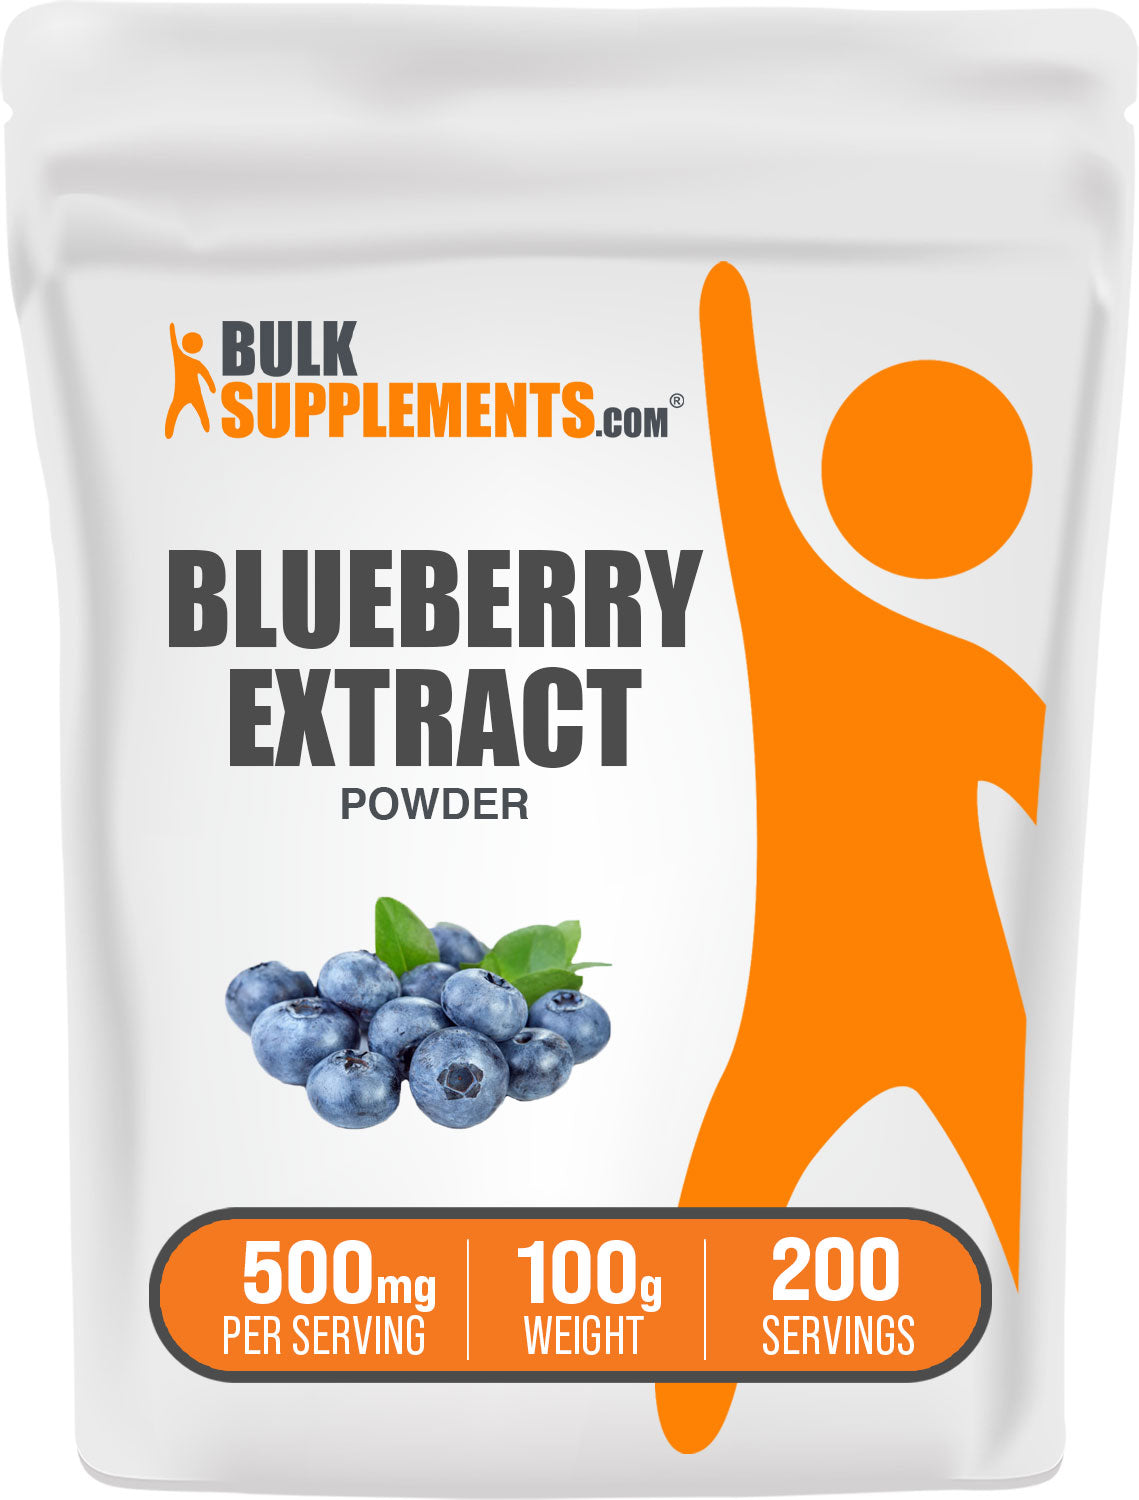 100g of blueberry powder